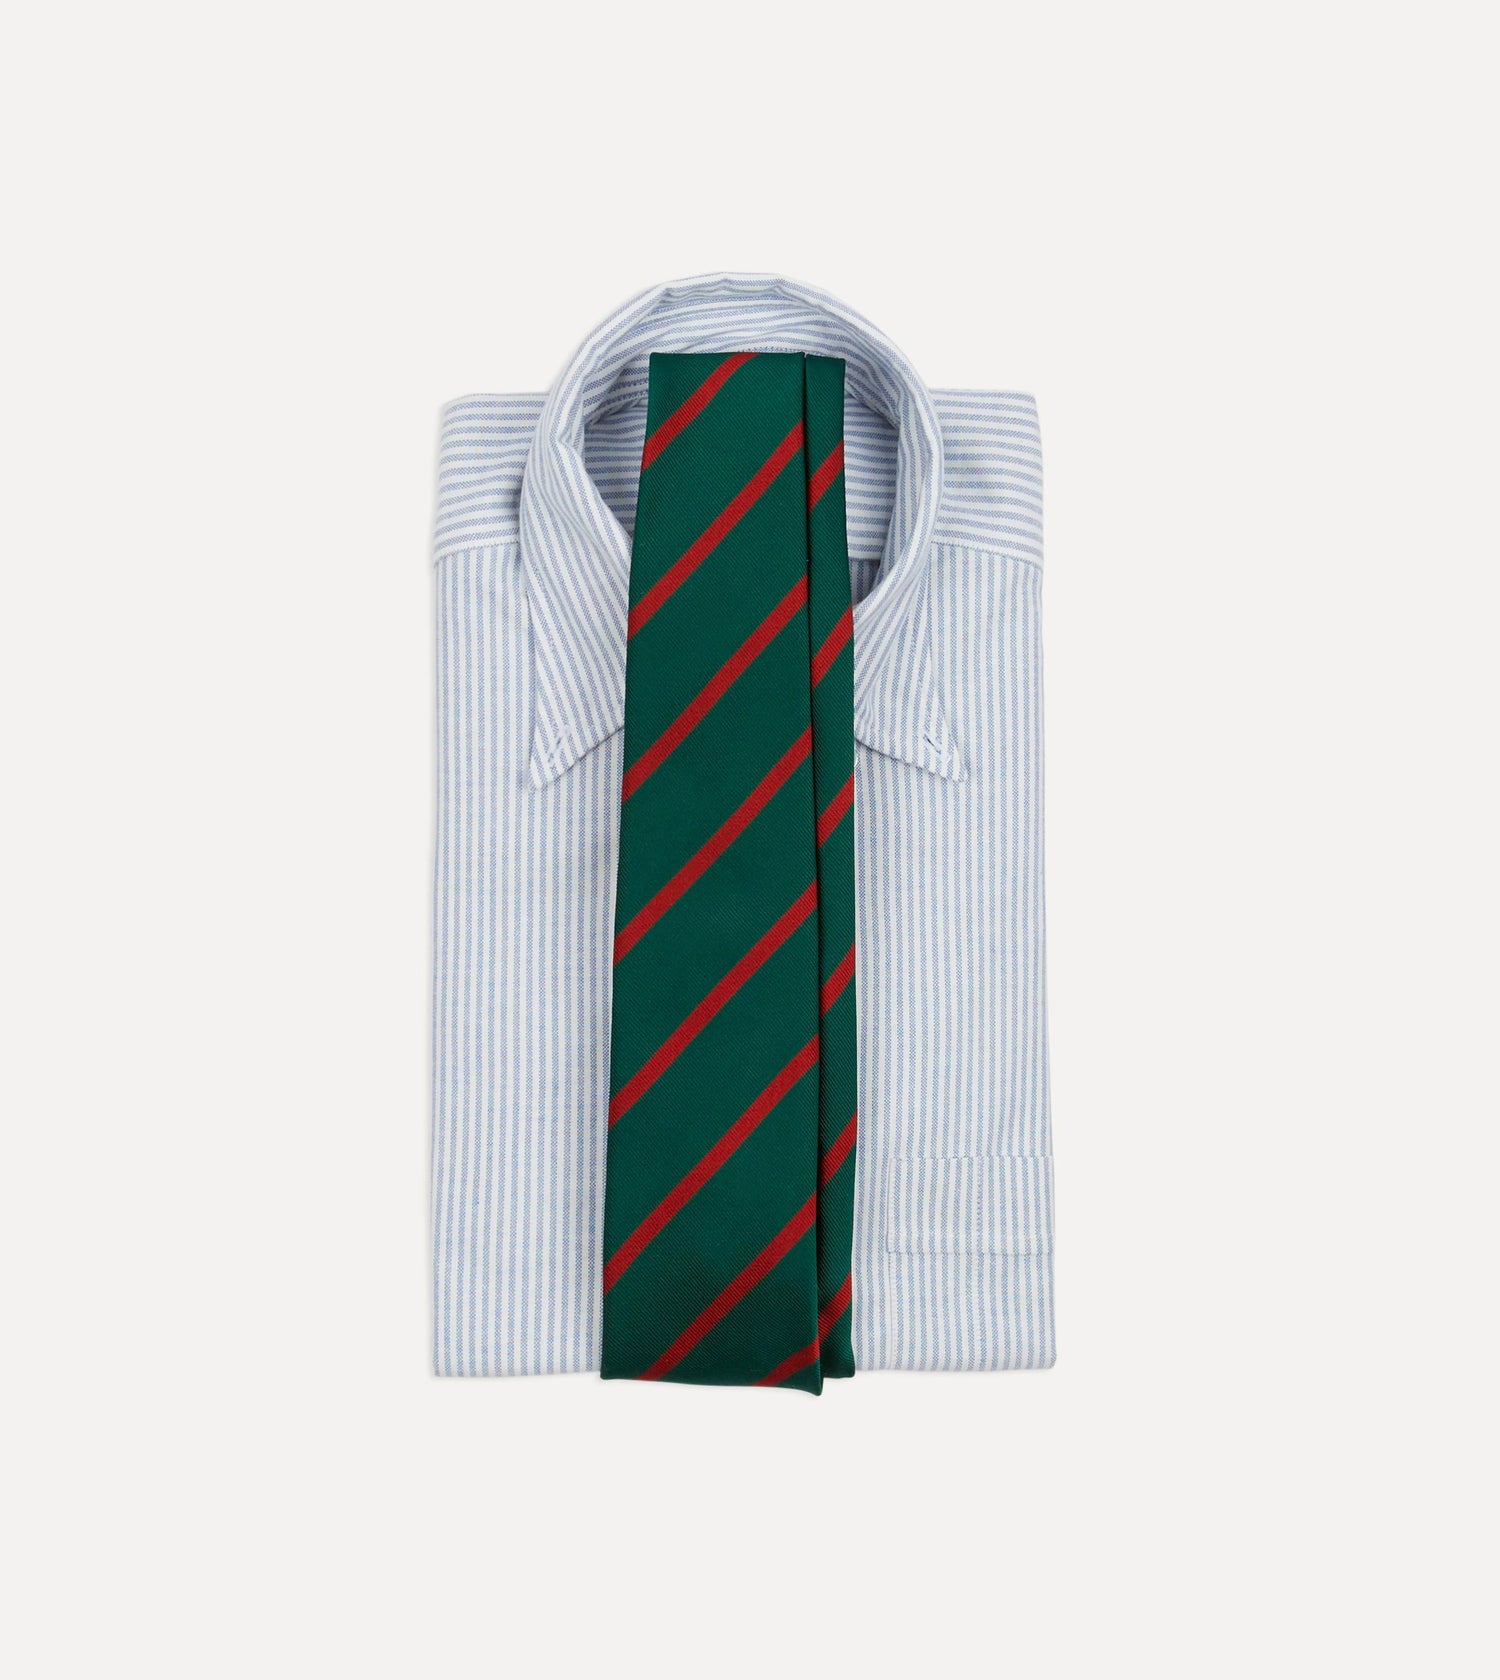 Green and Red Stripe Repp Silk Tie